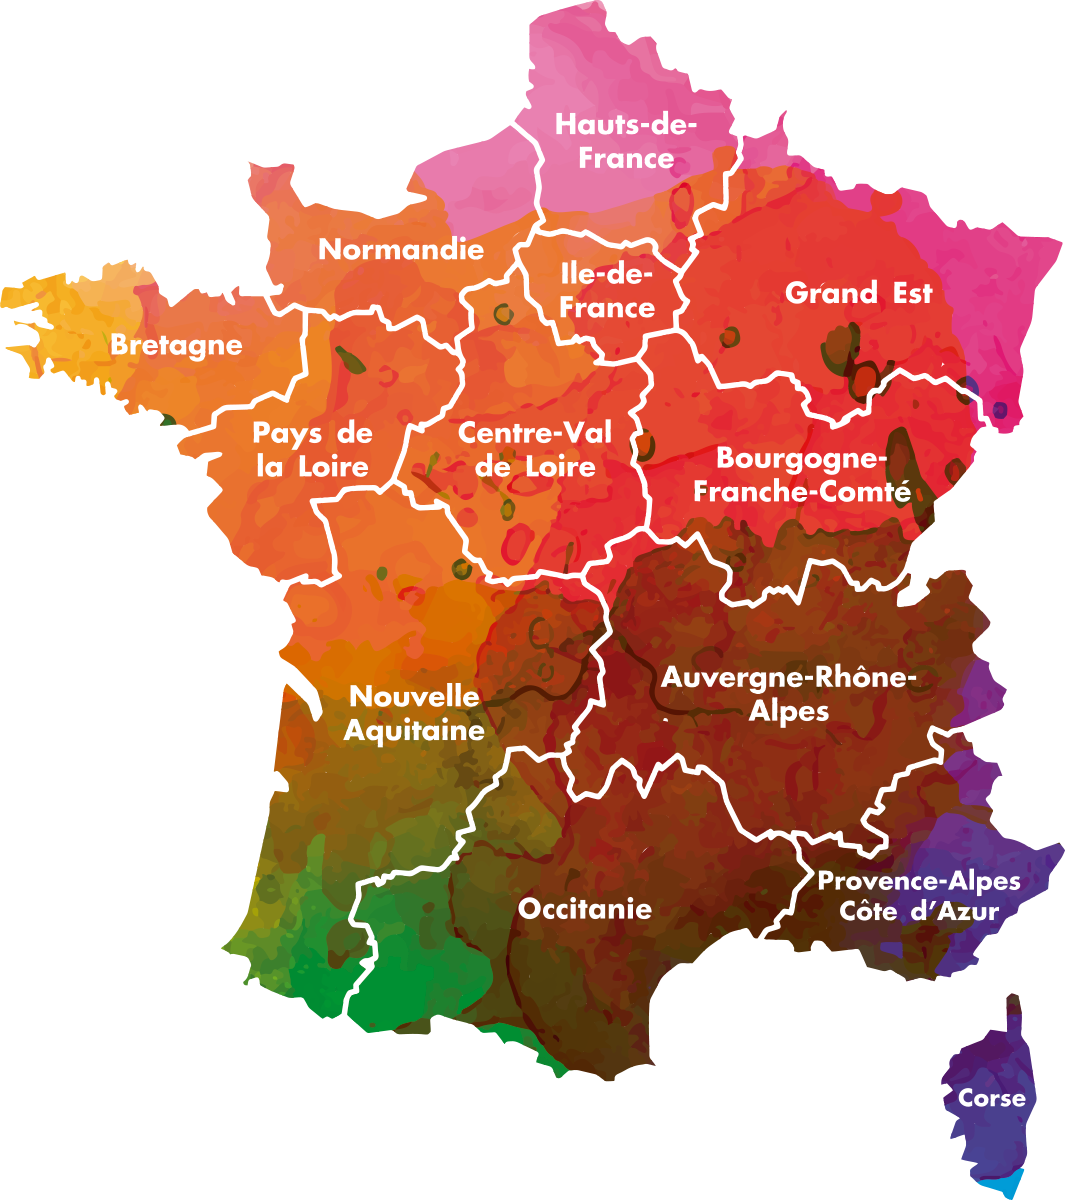 Region de france. Carte de France Regions. La France Regions. Regions Francaises. Регионы Франции.